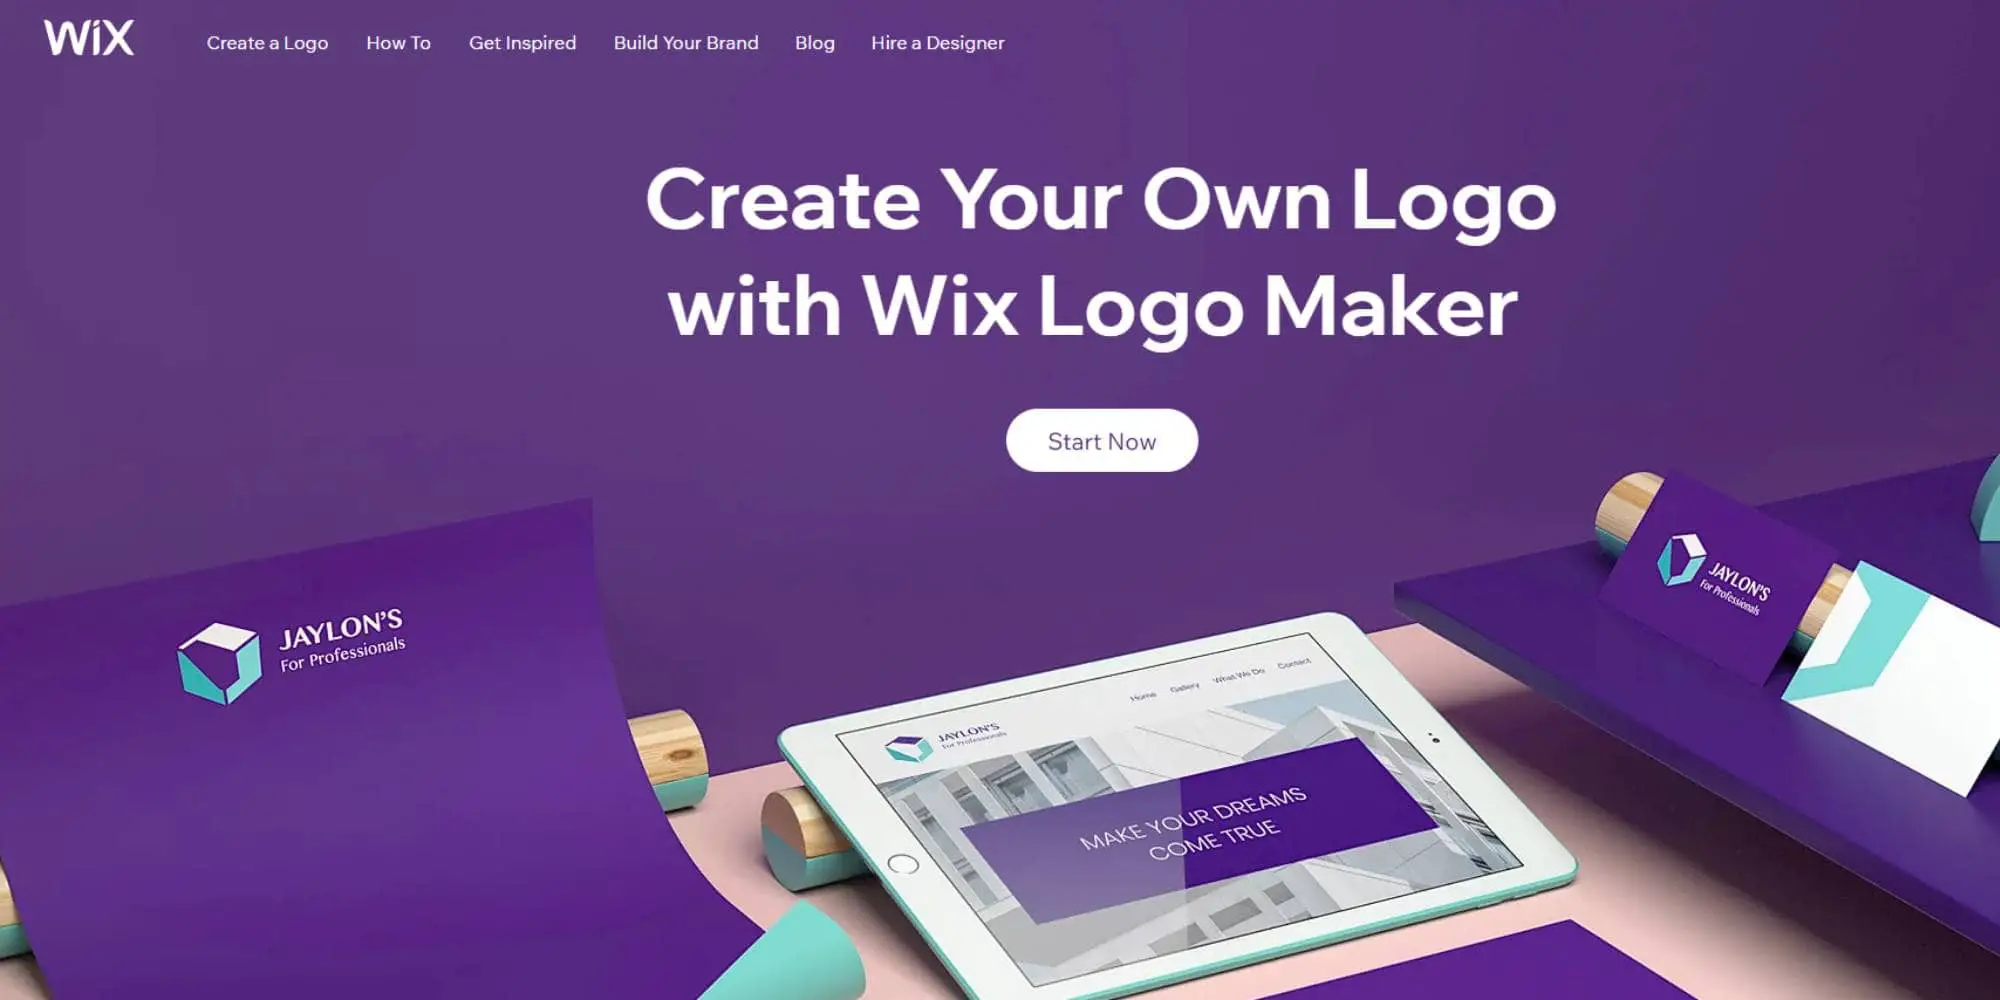 Wix logo maker is free